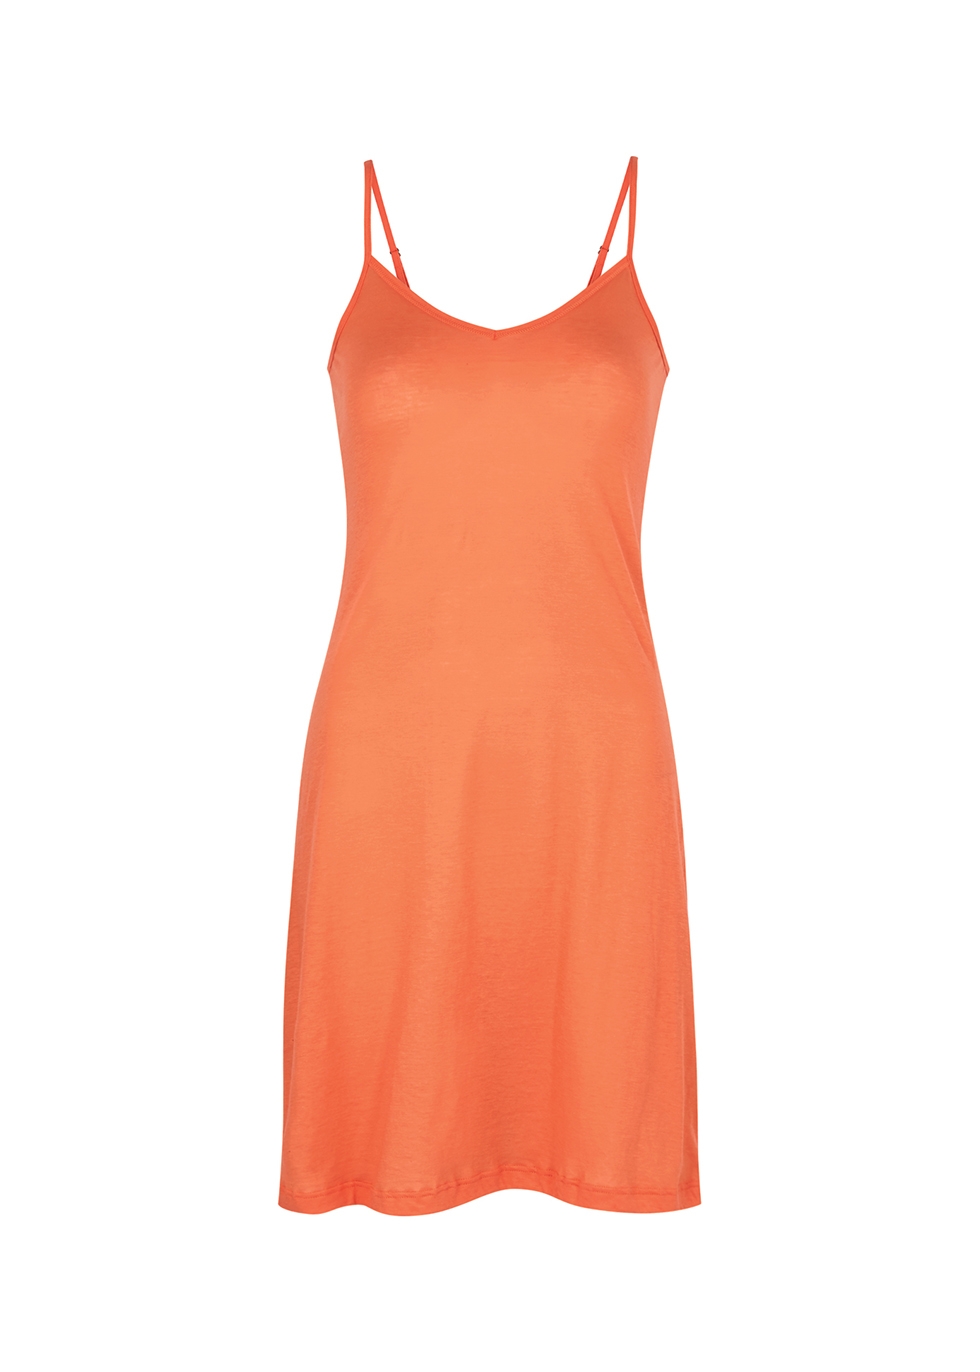 Hanro Ultralight orange cotton slip dress - Harvey Nichols